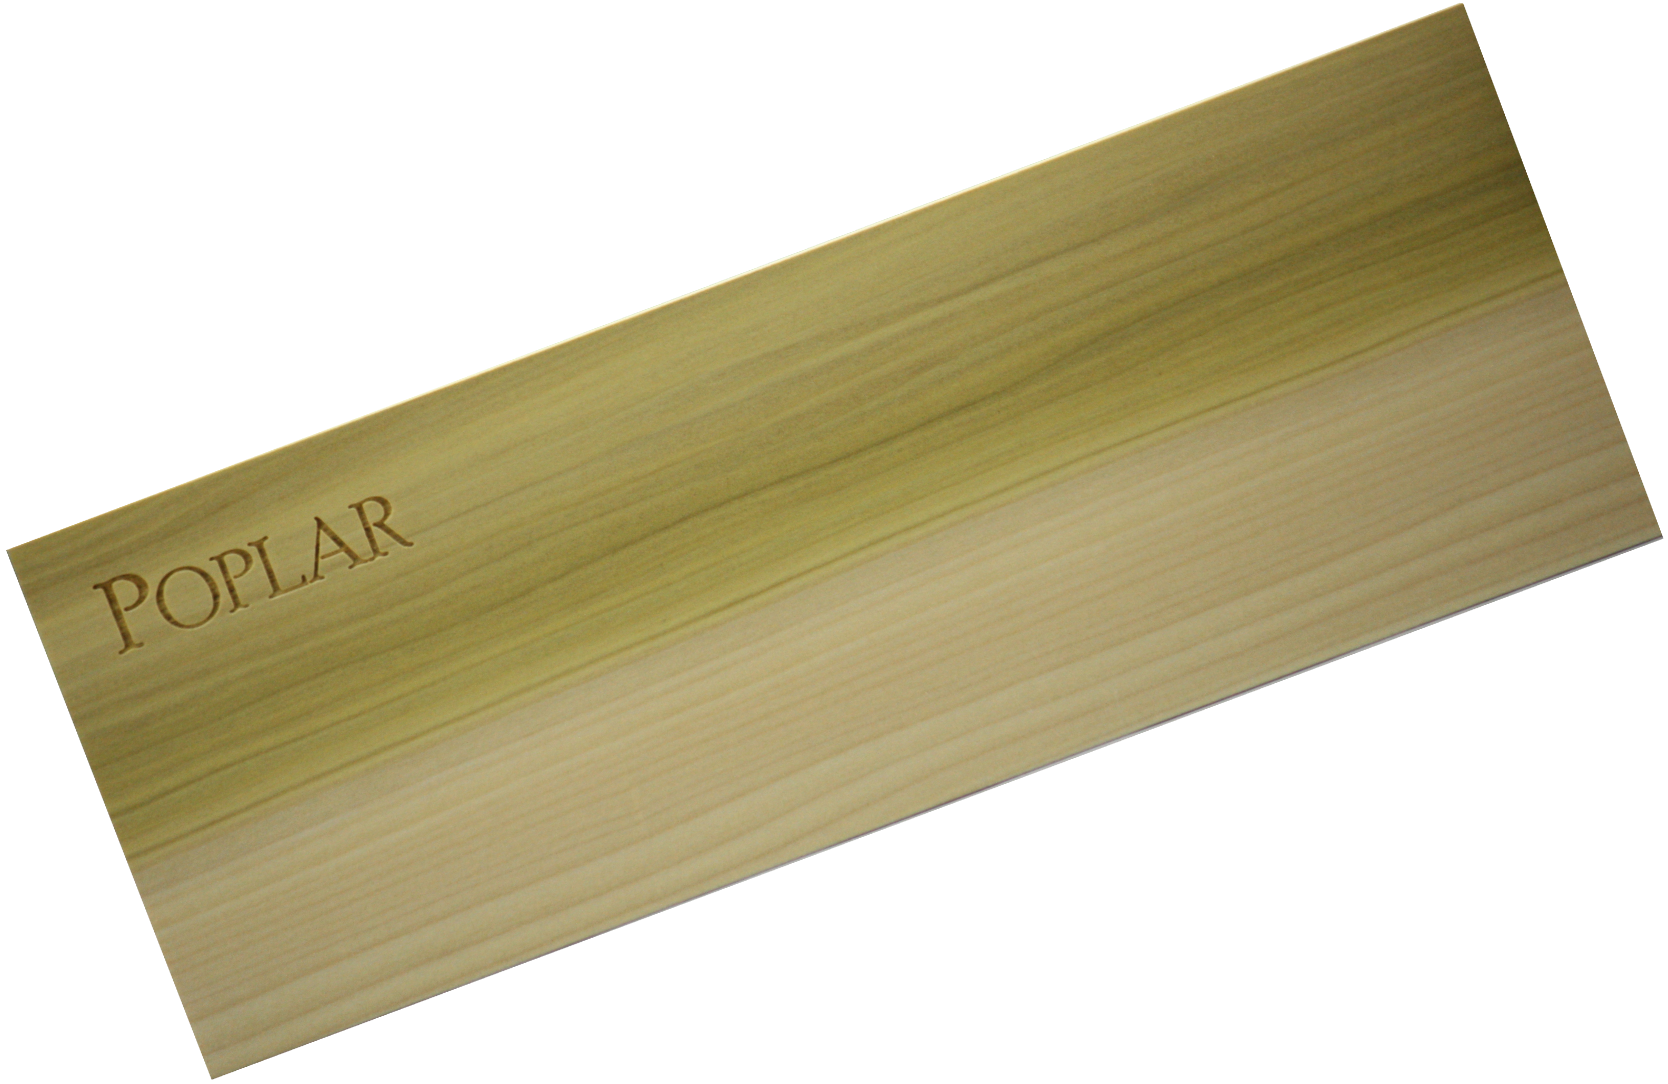 Wood Strip (Poplar) 4.5" x 16" x  (1/16", 3/32", 1/8", 3/16" or 1/4") 